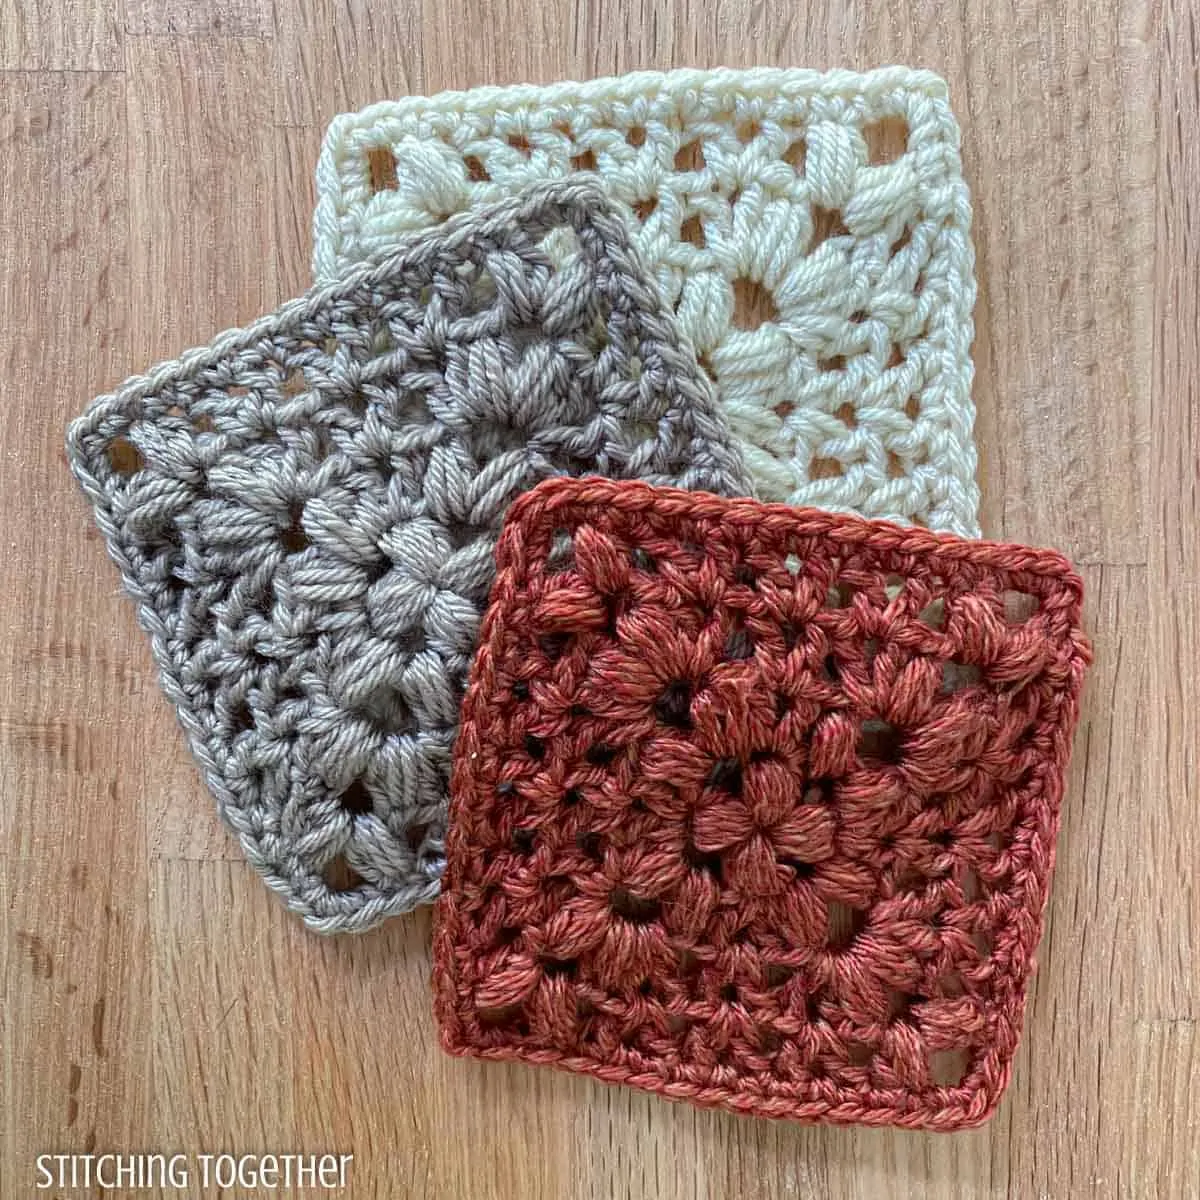 How to Make a Crochet Granny Square